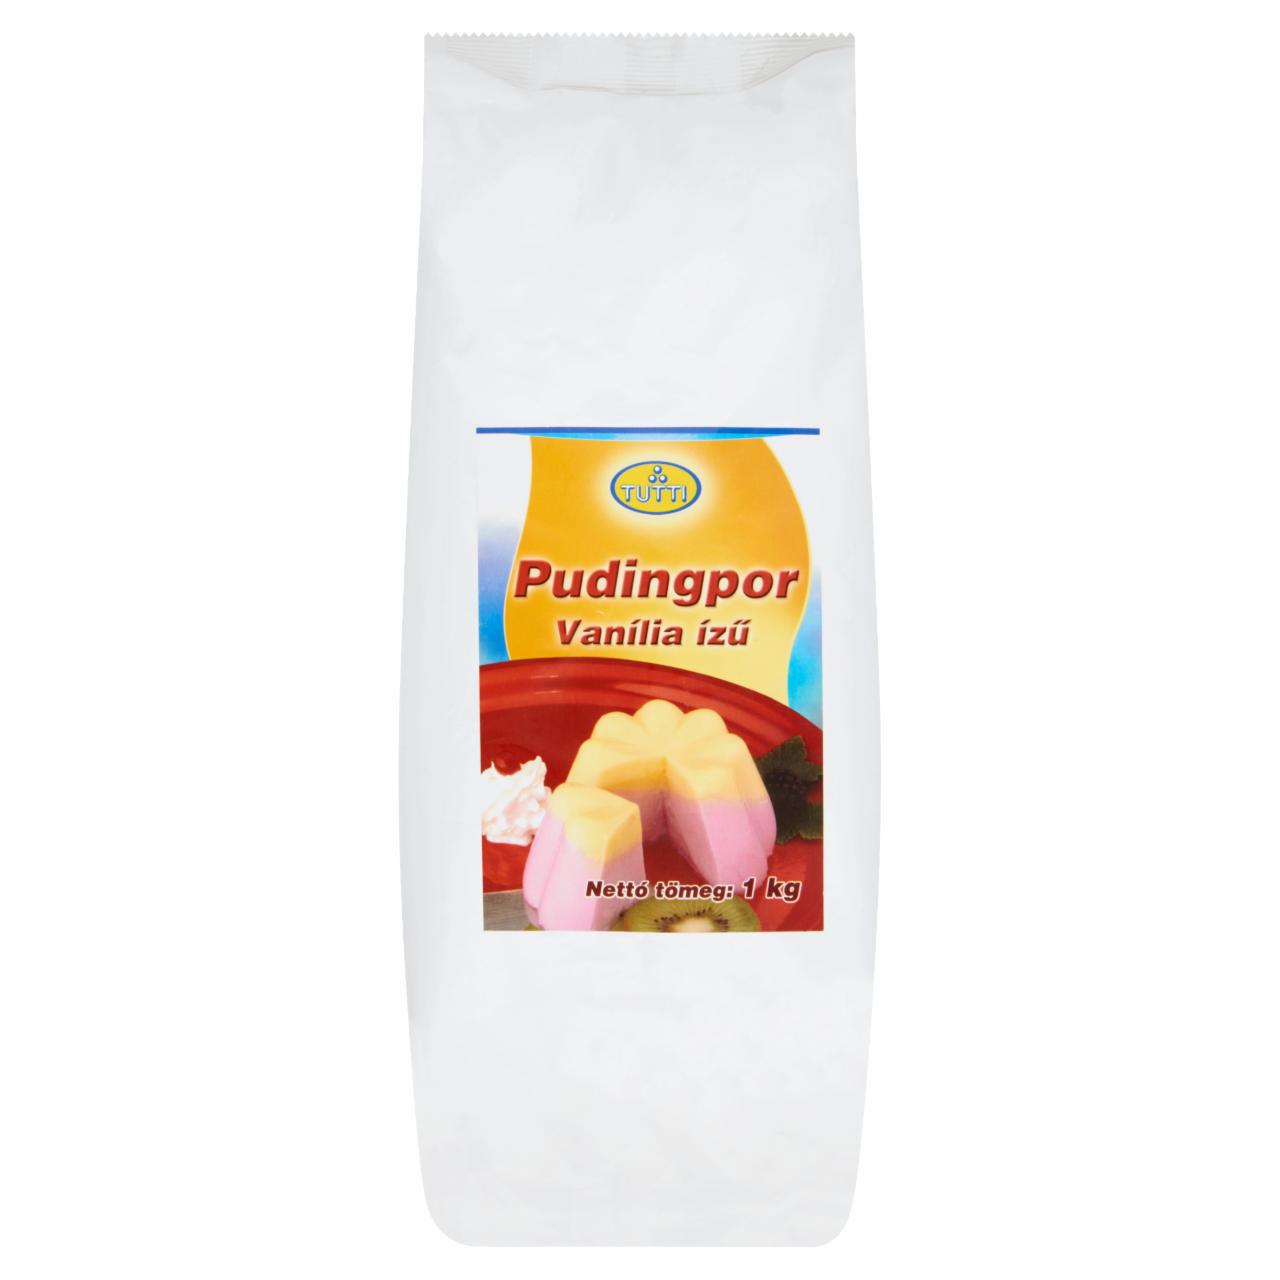 Képek - Tutti vanília ízű pudingpor 1 kg